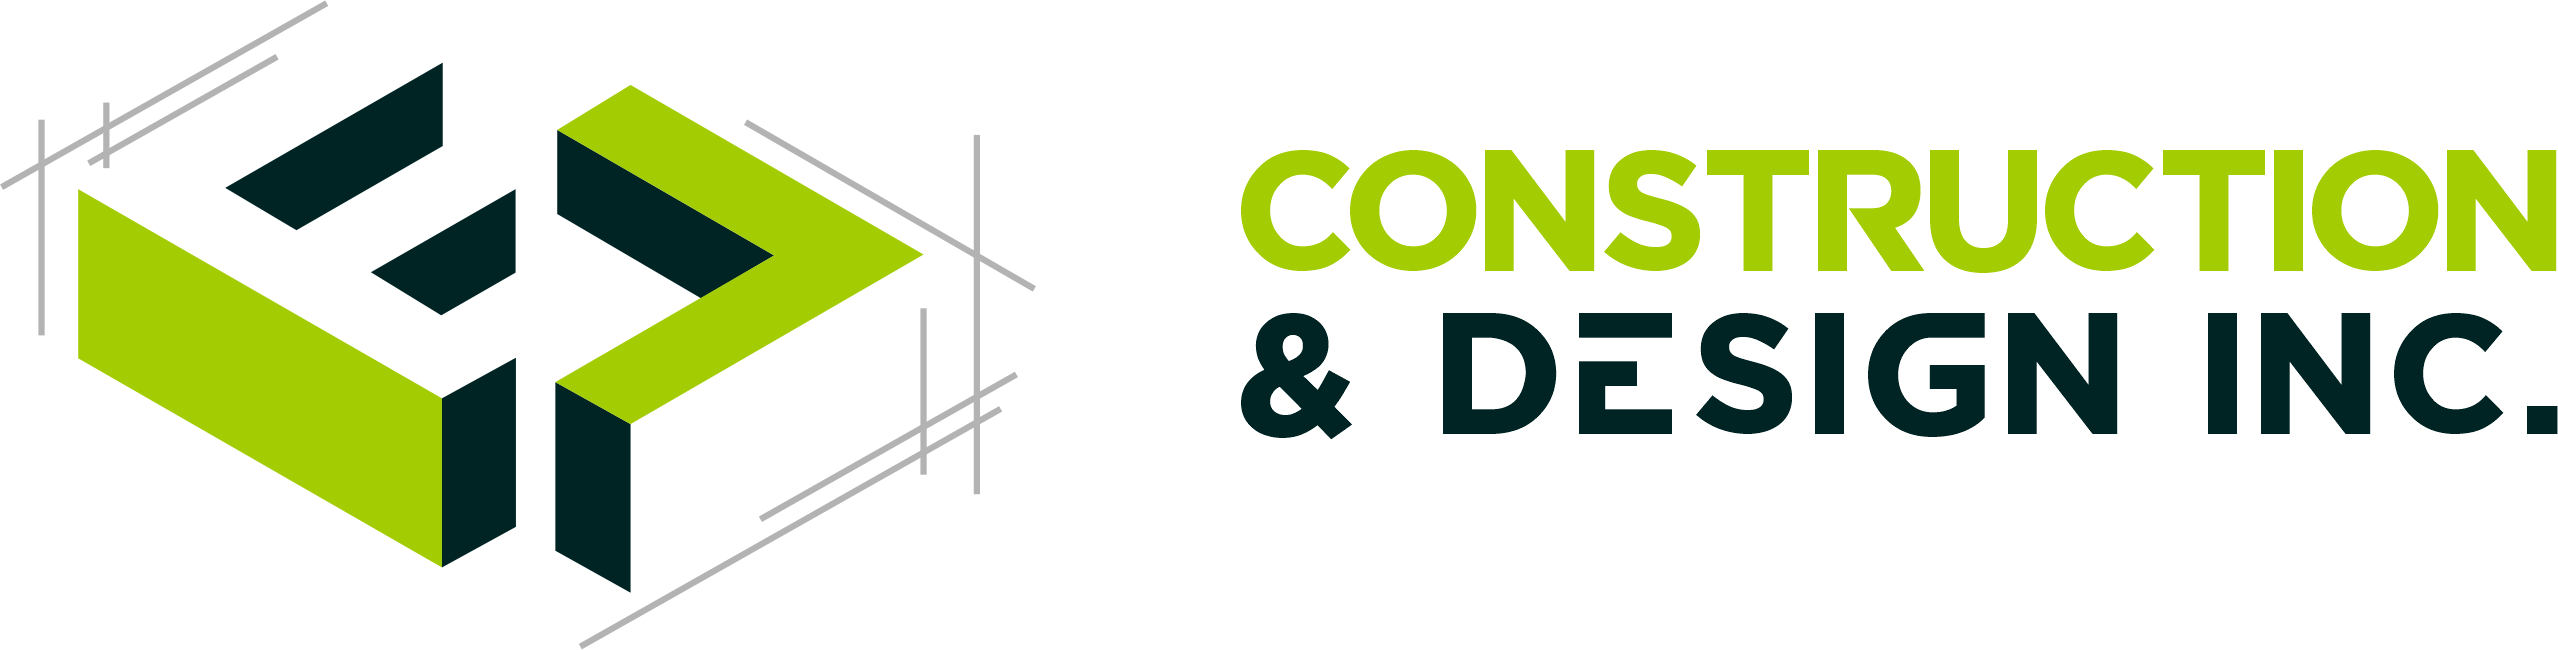 FL Construction & Design, Inc. Logo